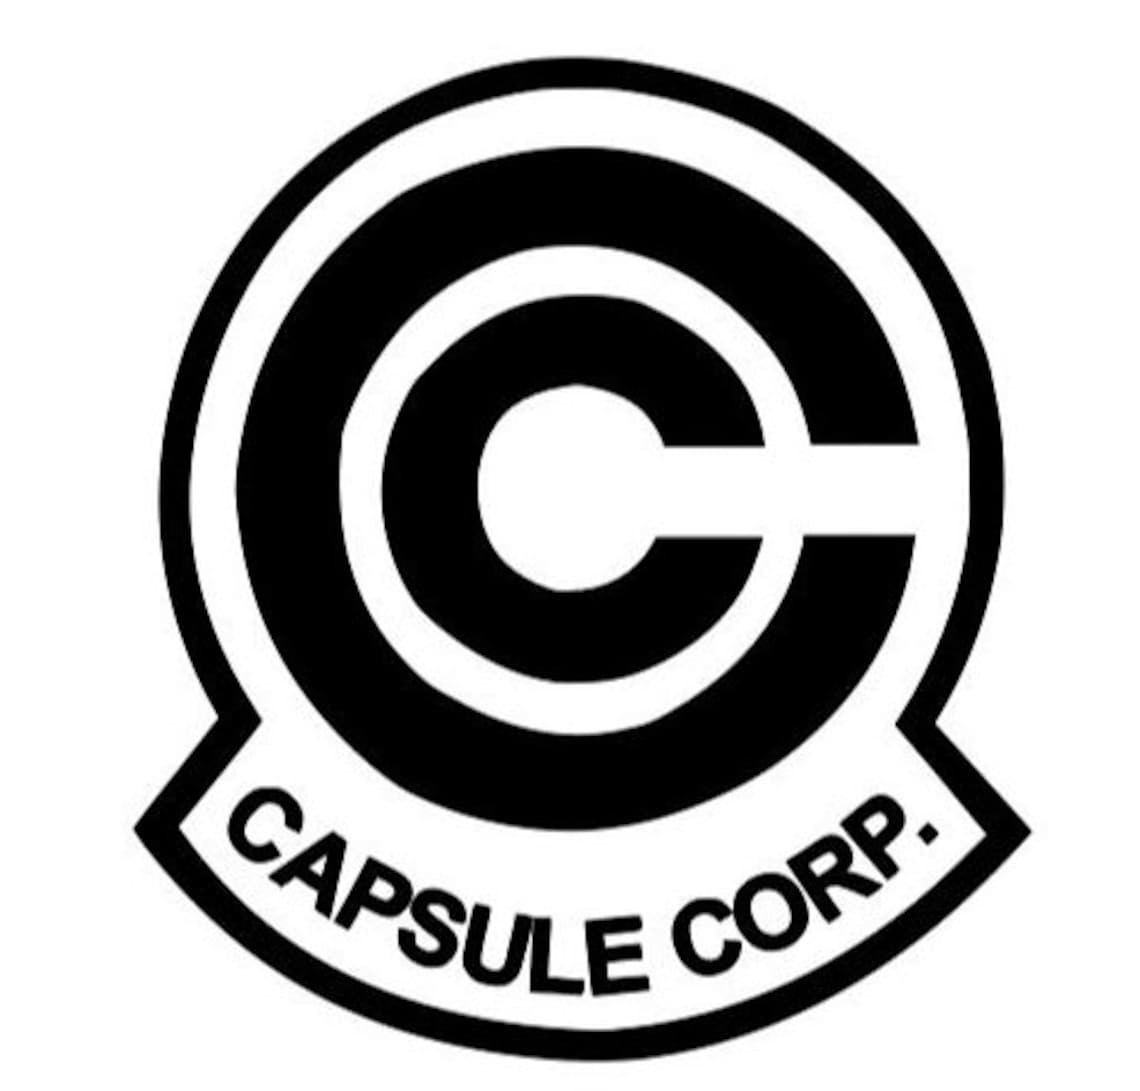 Capsule Corp Vinyl Decal Etsy